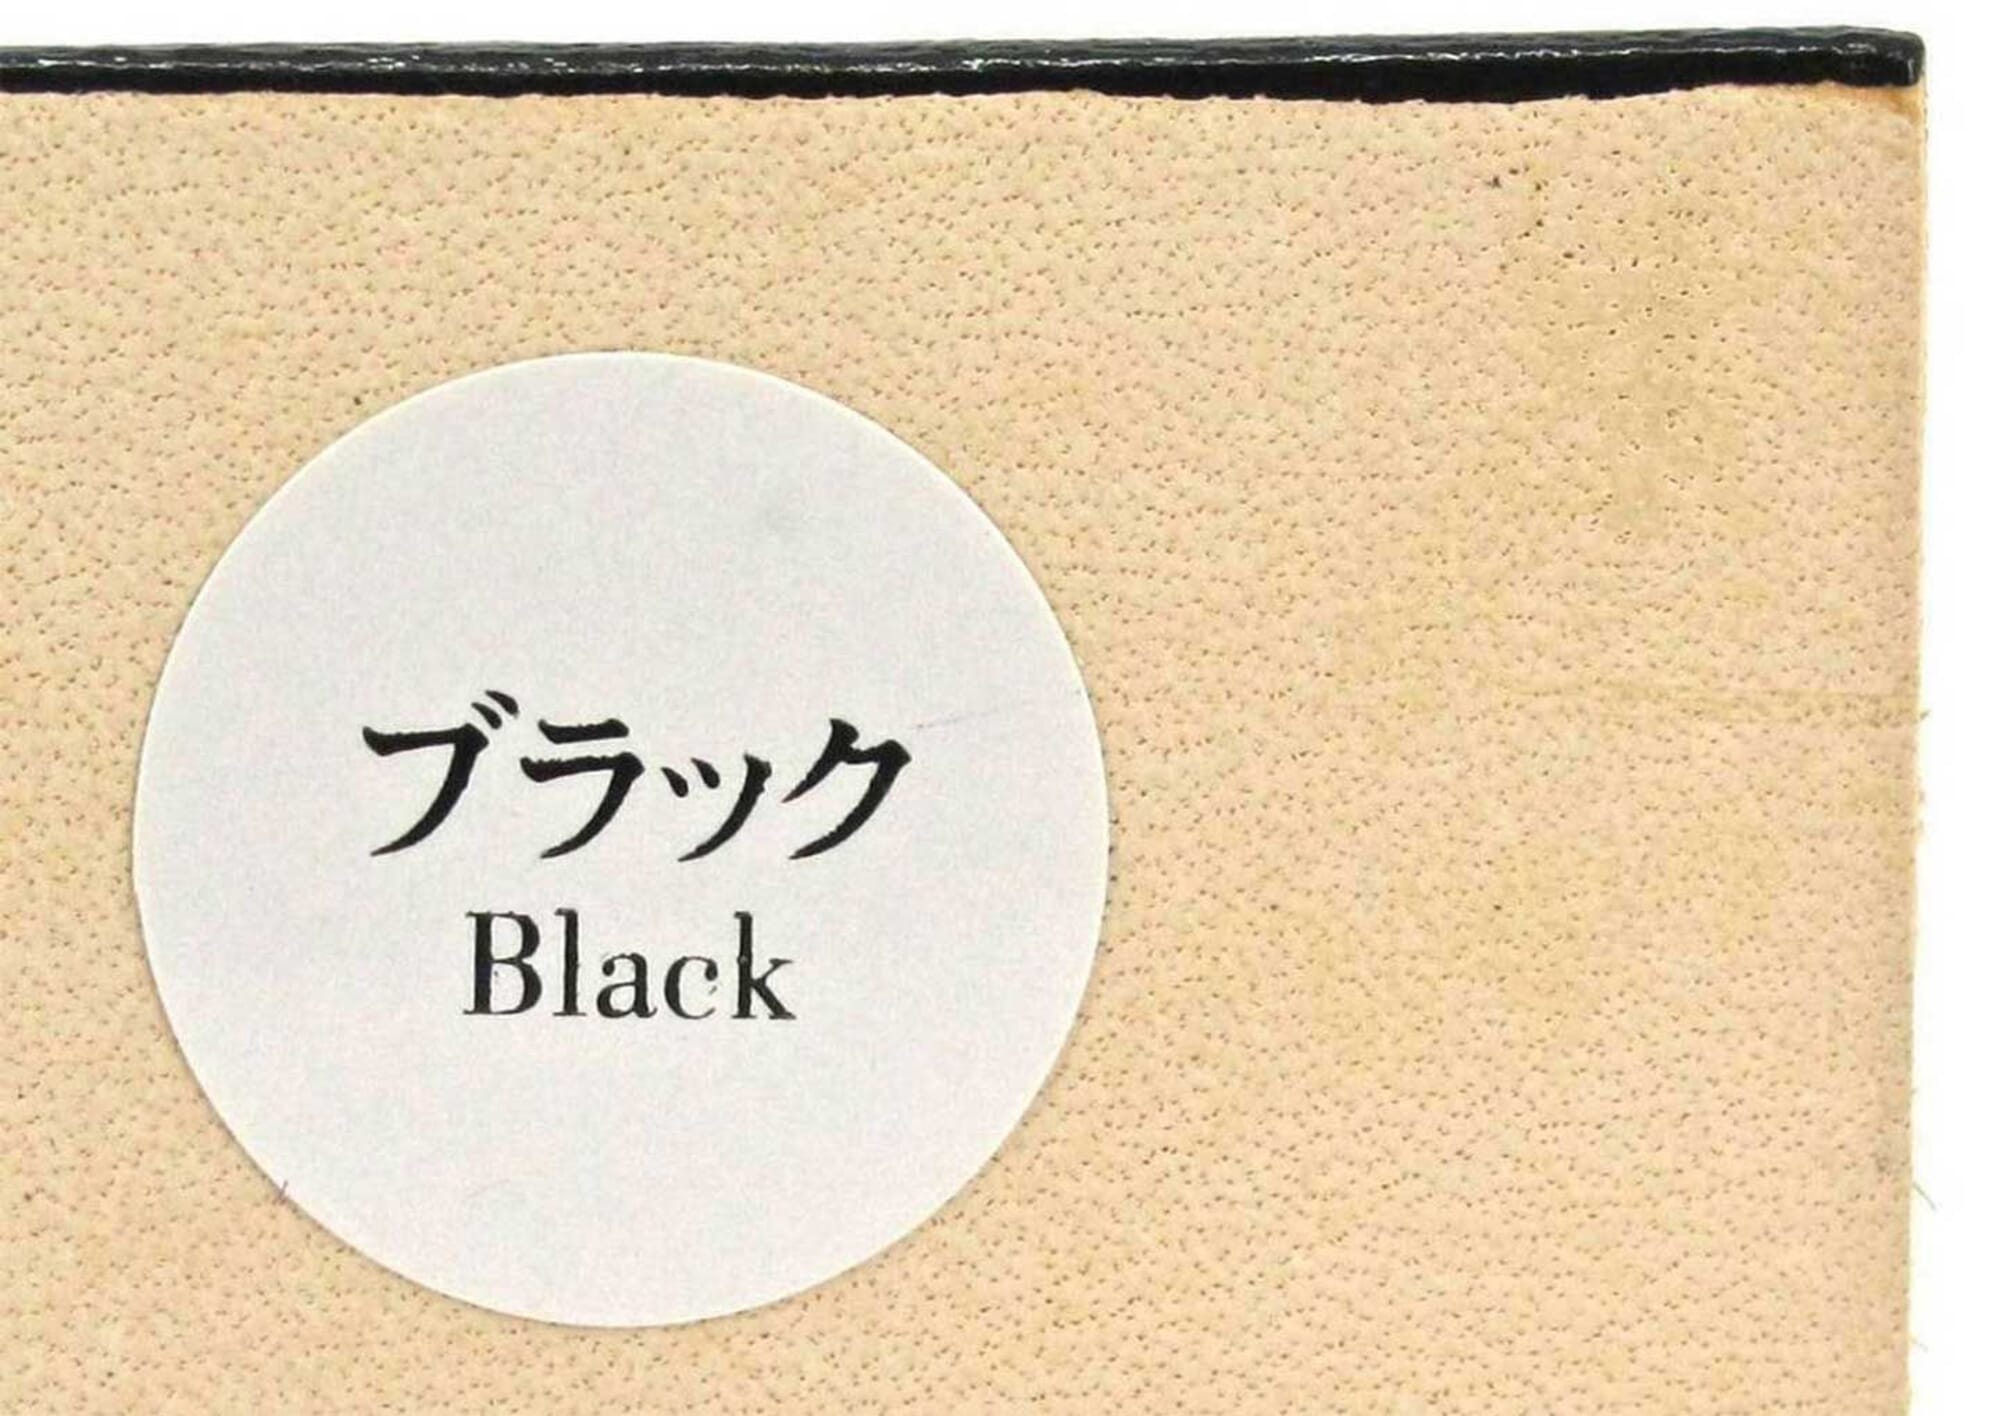 Seiwa Cova Super Sealant Black 30g Leathercraft Enamel Leather Edge Dressing Lacquer Finishing Agent, to Color Coat Edges in Leatherwork